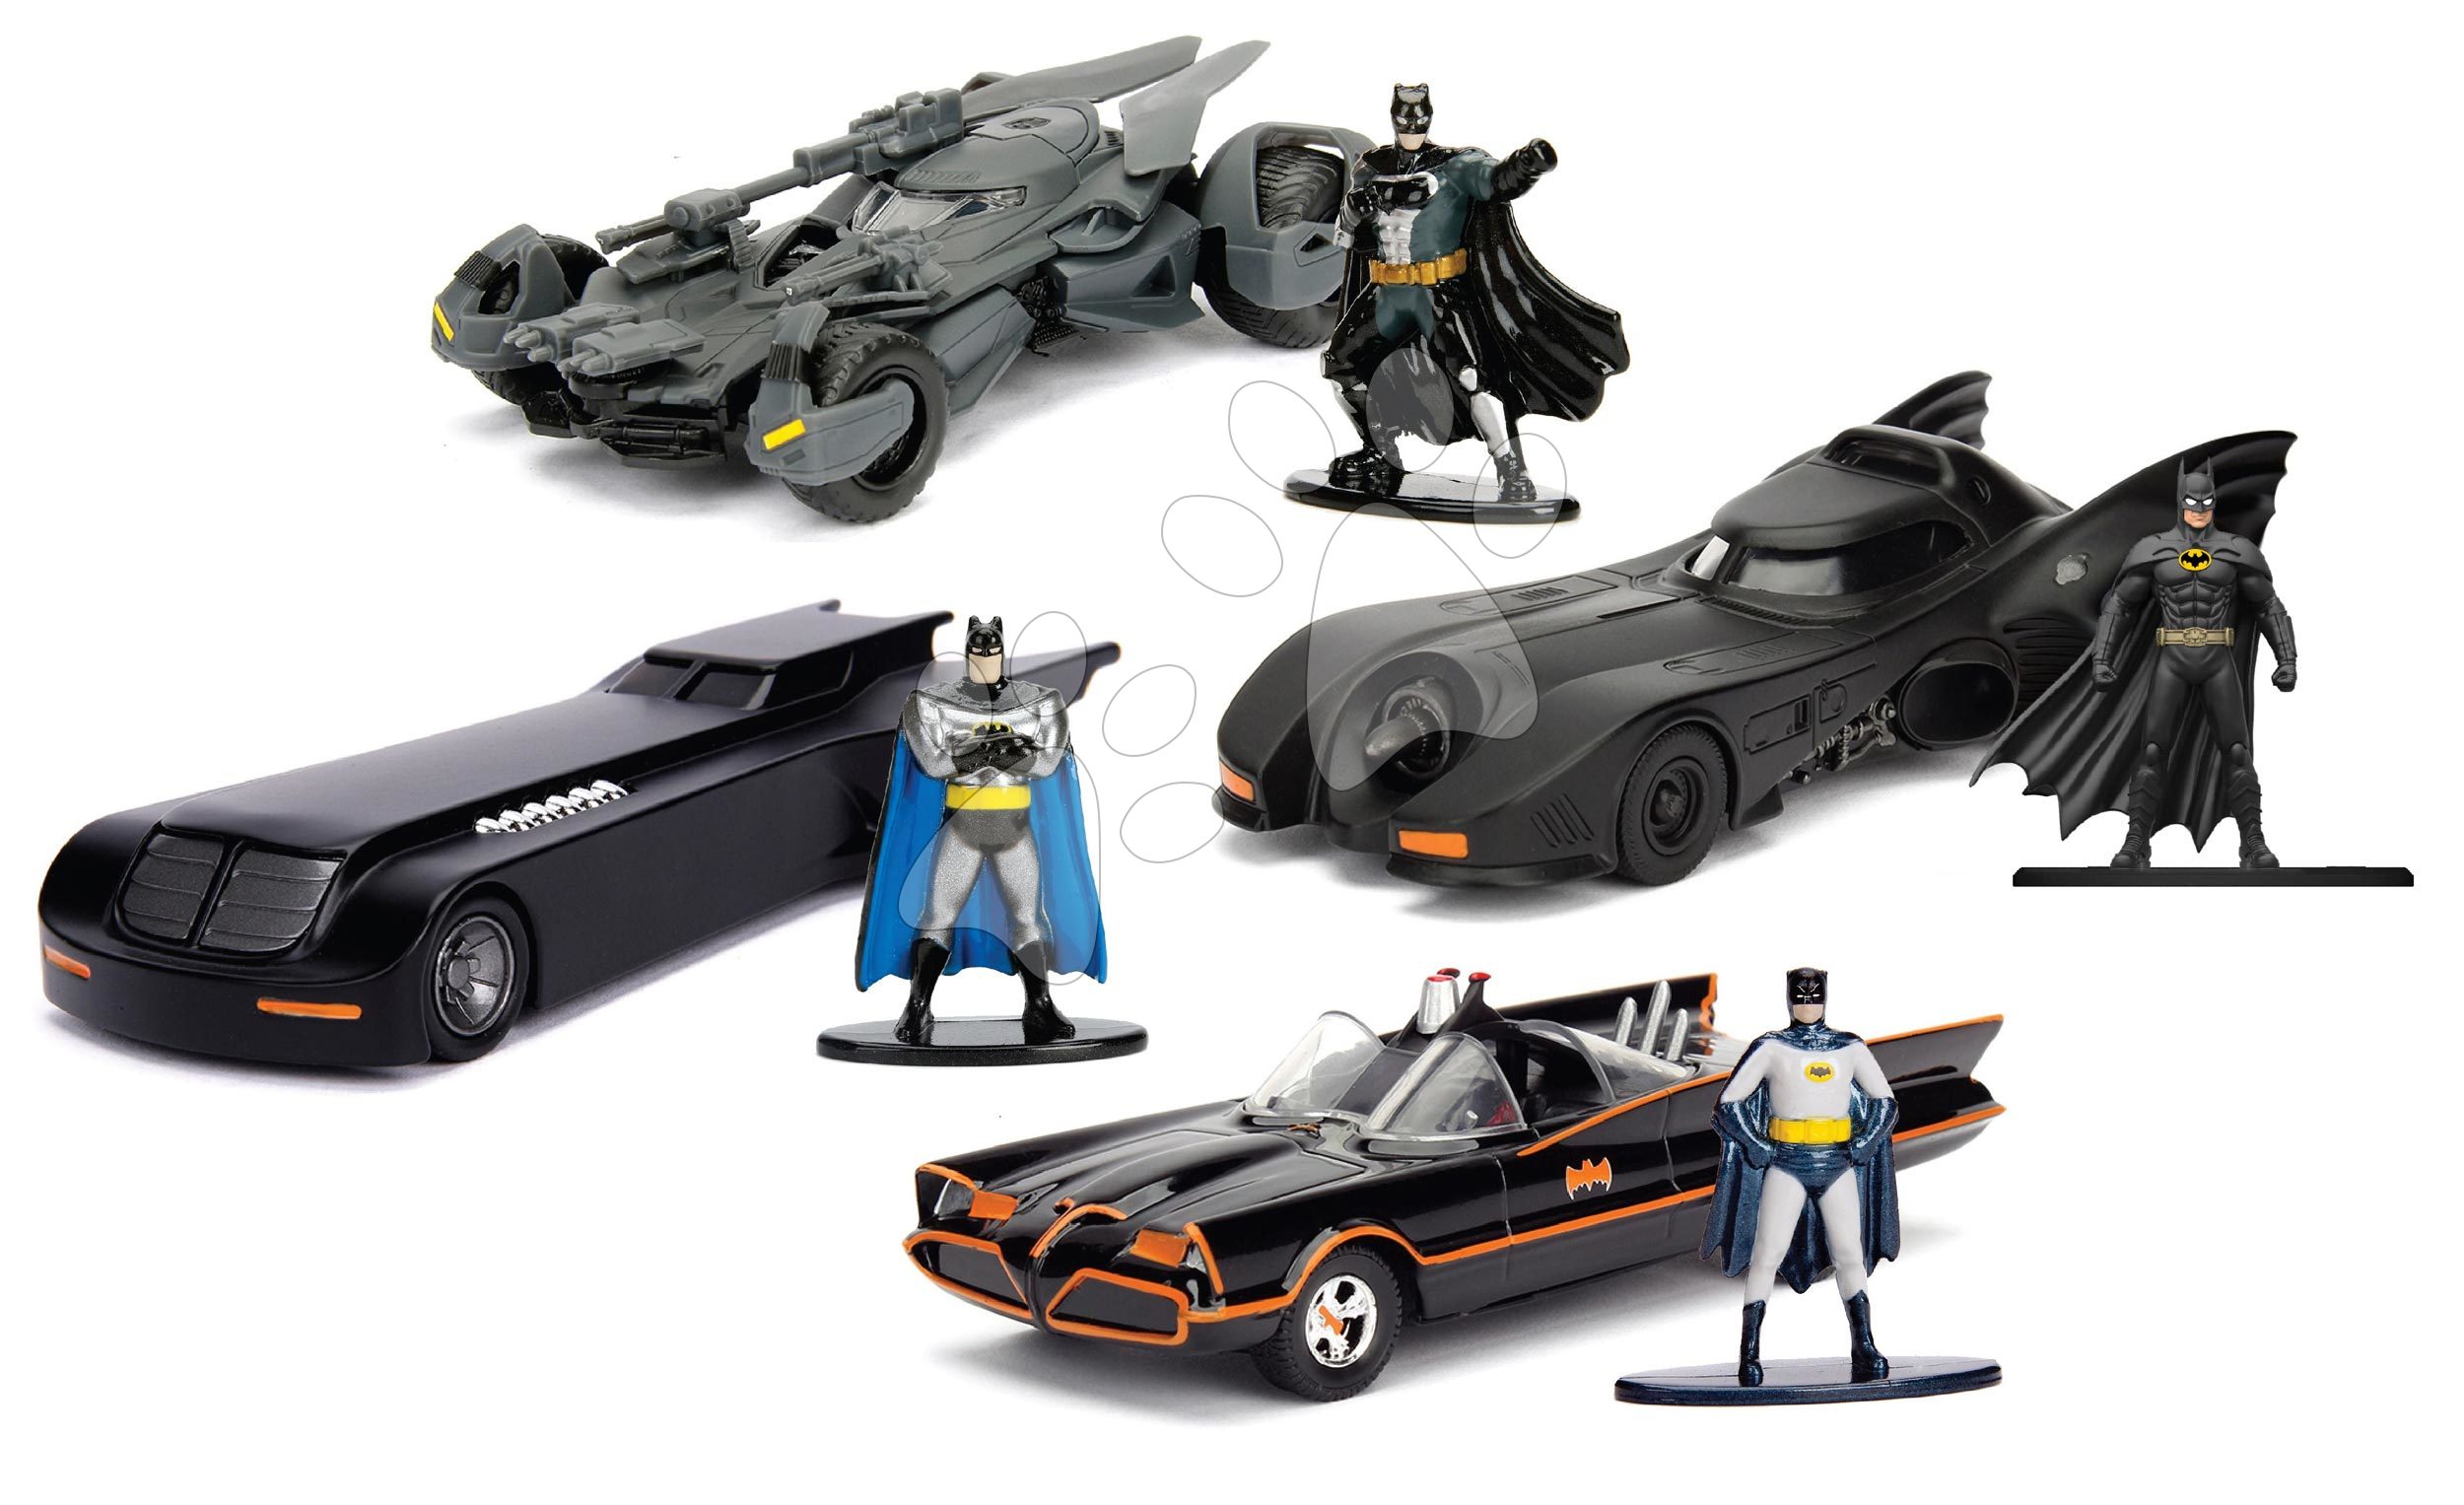 Autíčko Batman Batmobile Jada kovové s otevíratelnými dveřmi a figurkou Batmana 4 druhy délka 13,6 cm 1:32